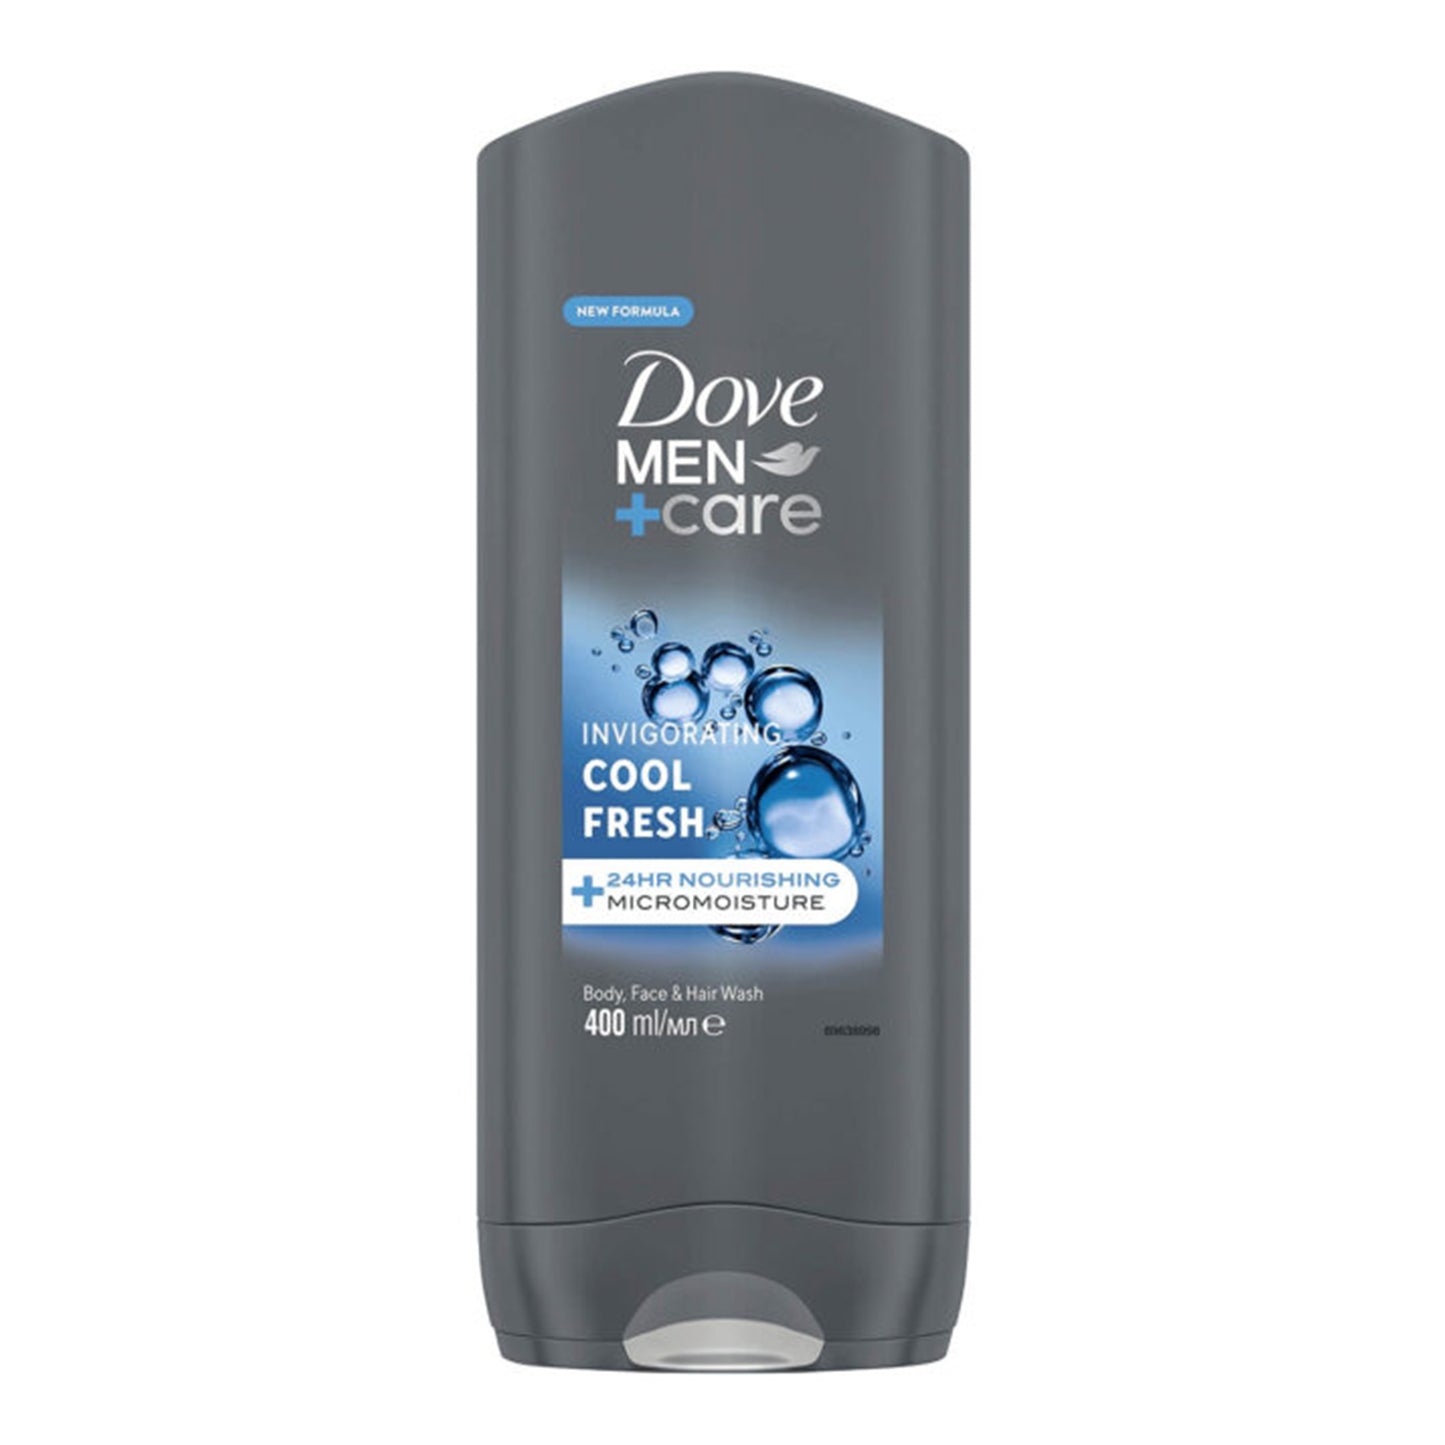 DOVE MEN+CARE - INVIGORATING COOL FRESH BODY, FACE & HAIR WASH - 400ML